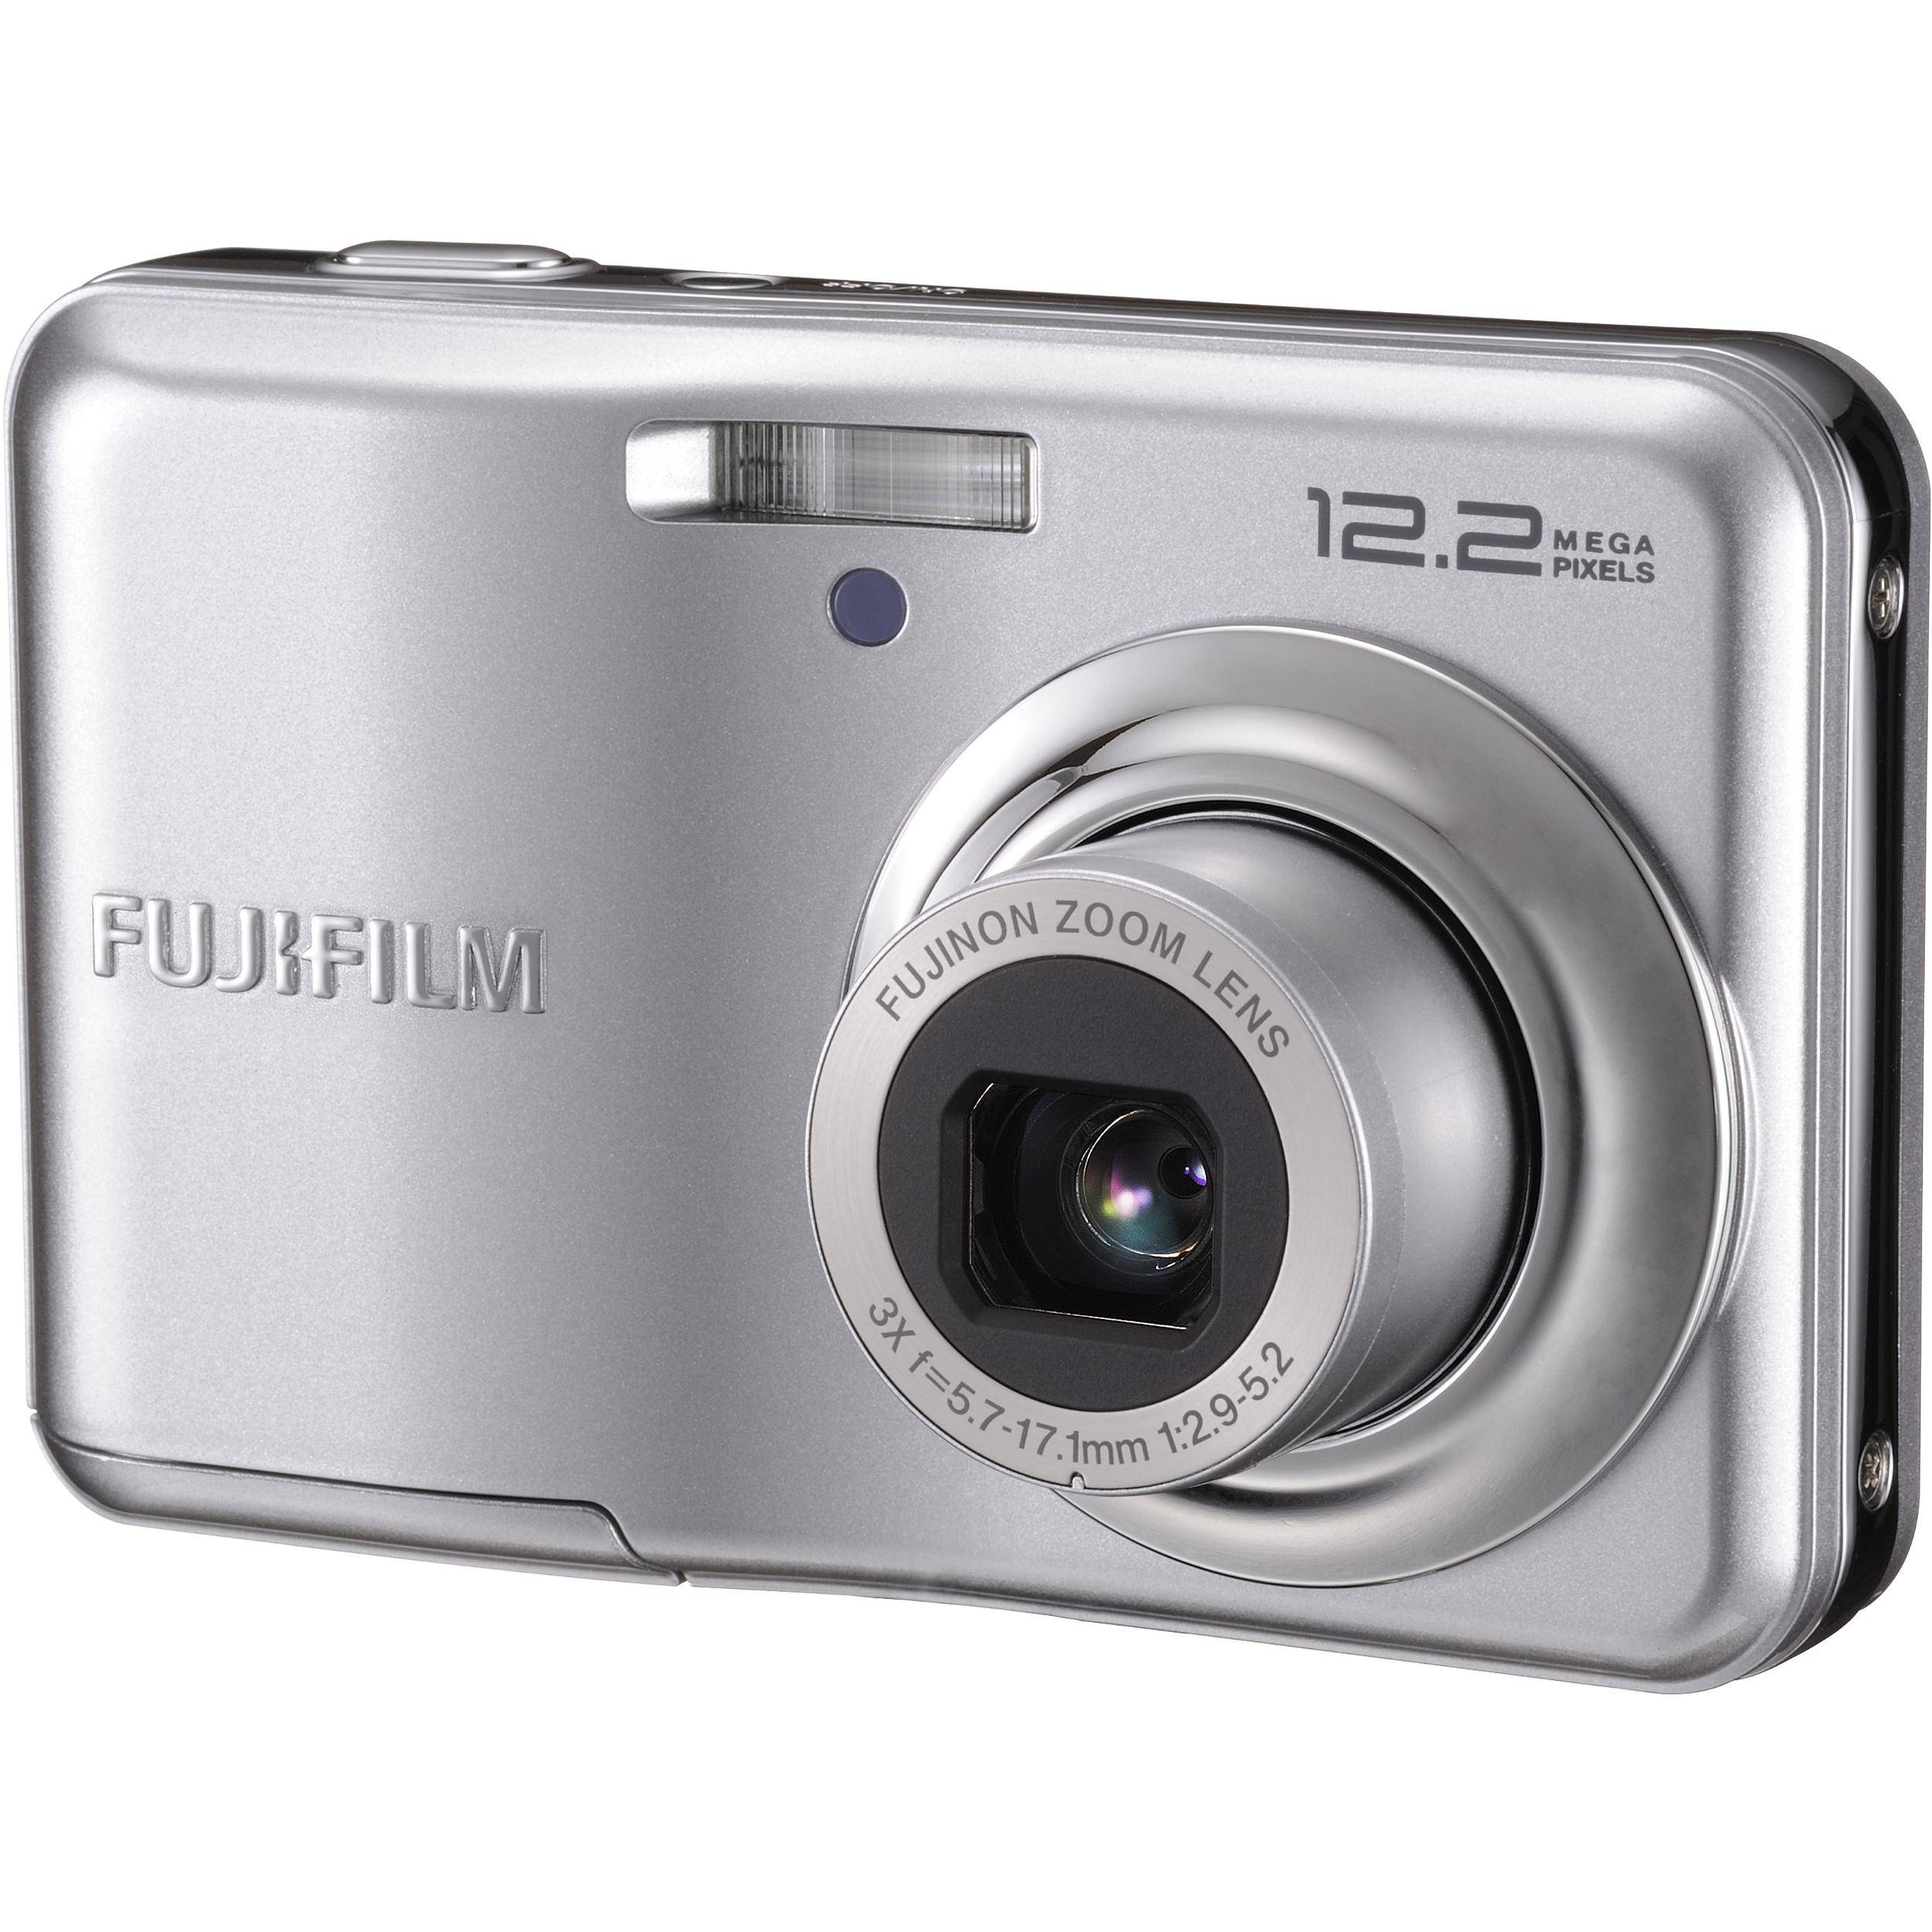 Fujifilm A220 / A225 Camera